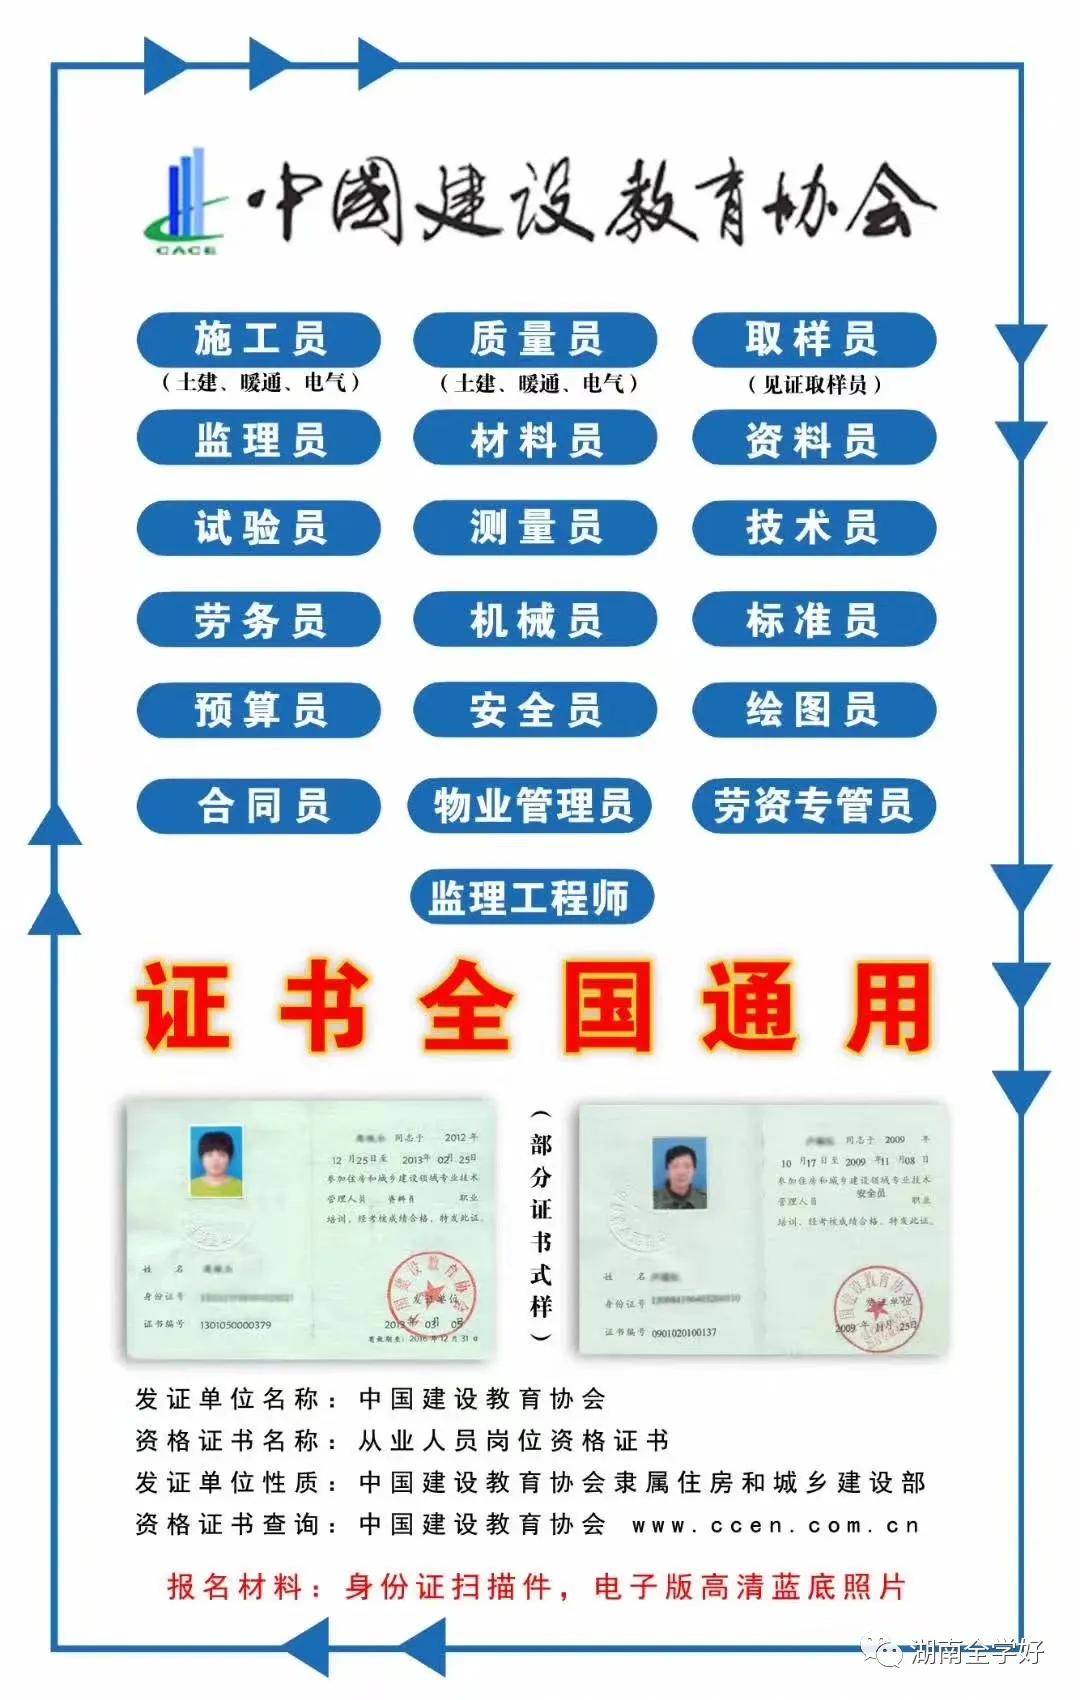 comcn/中国建设教育协会发的相关岗位证书就